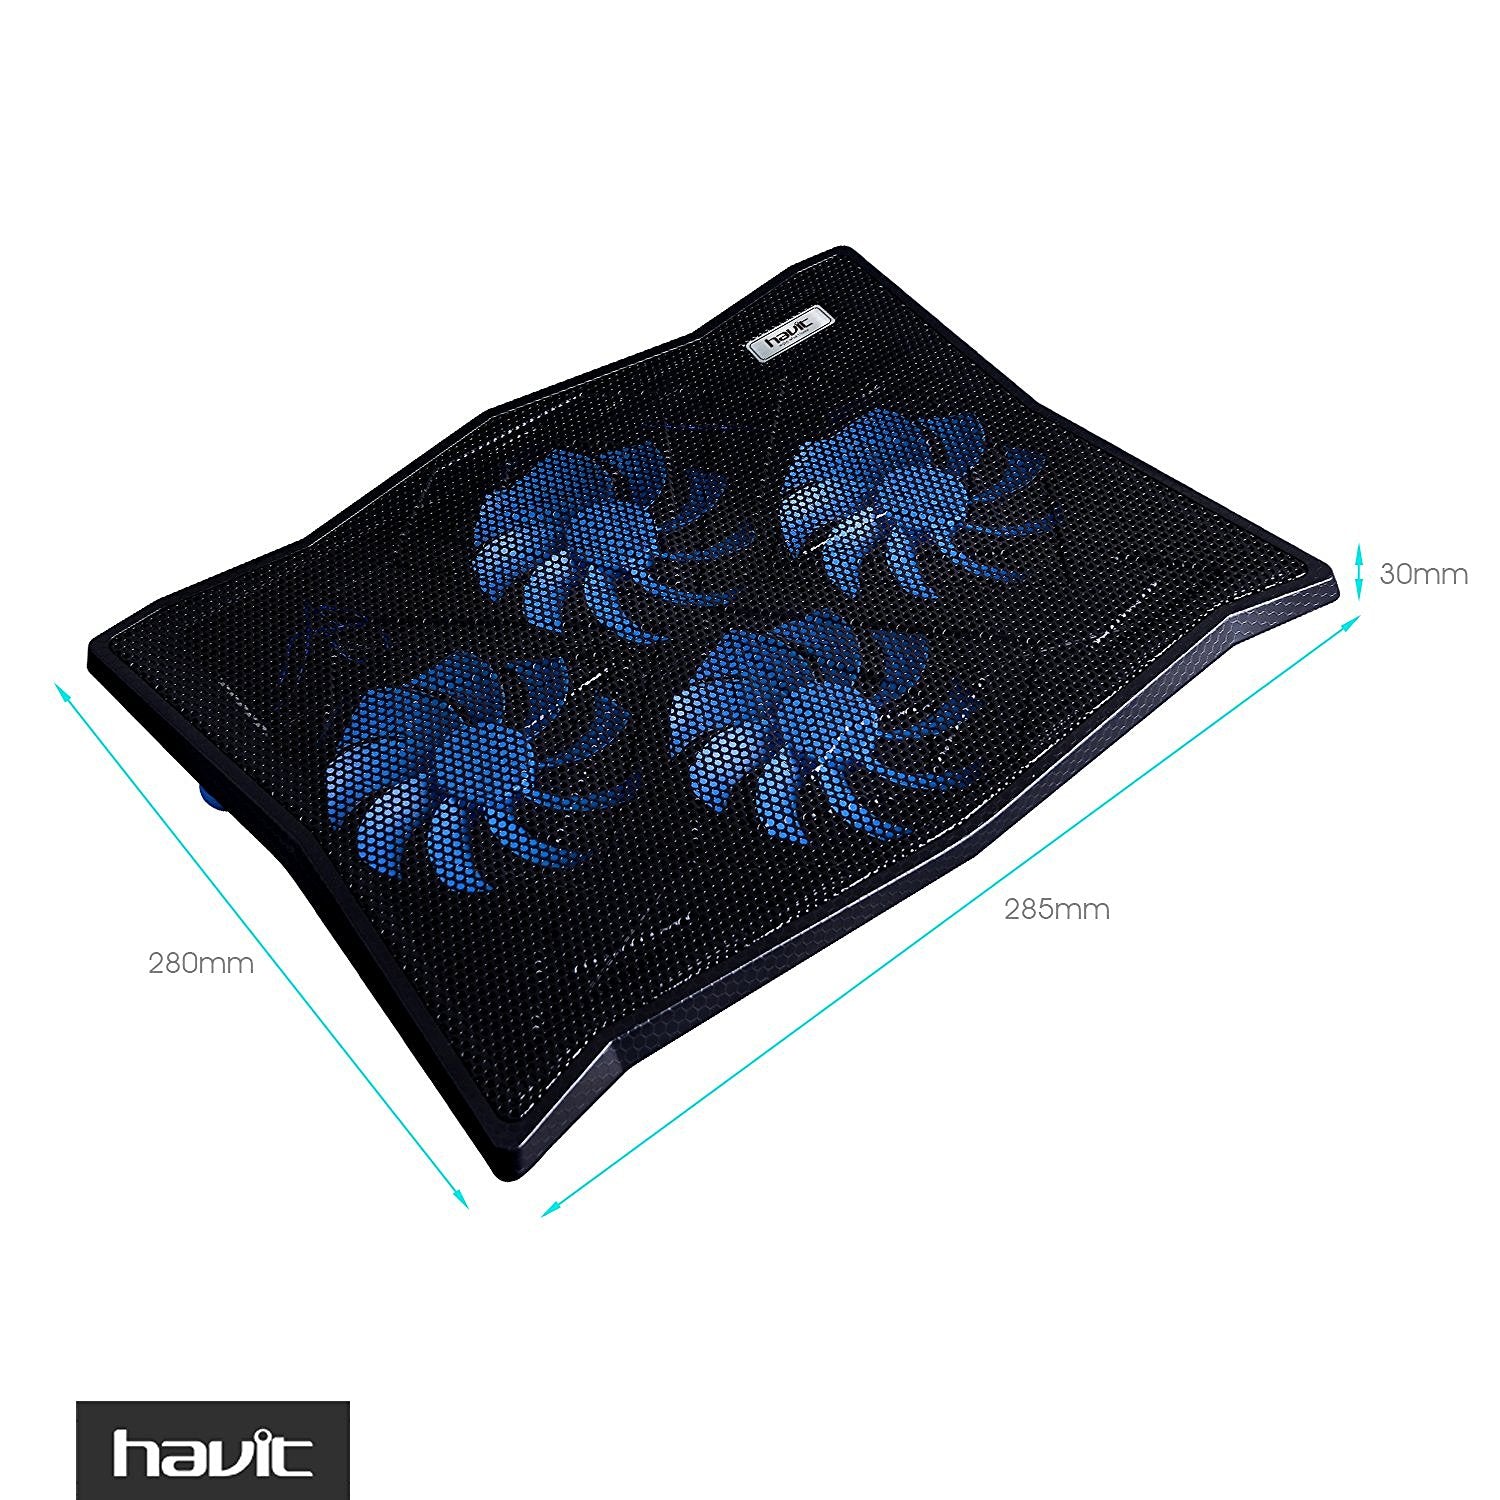 HAVIT HV-F2063A Laptop Cooling Pad for 14-17 Inch Laptops